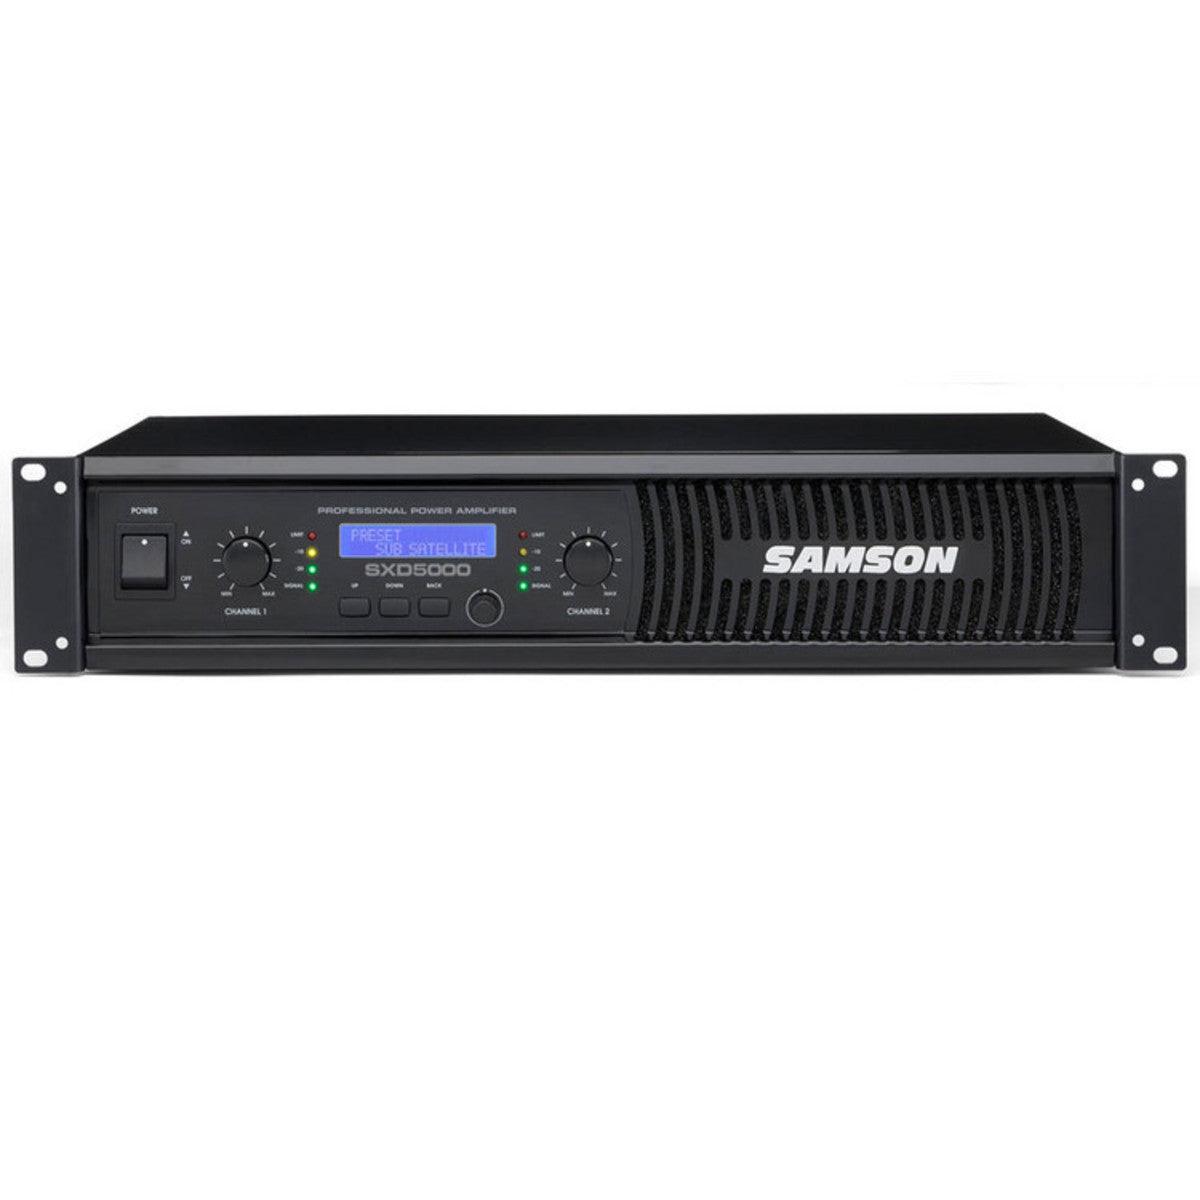 Samson SXD5000 Power Amplifier - DY Pro Audio